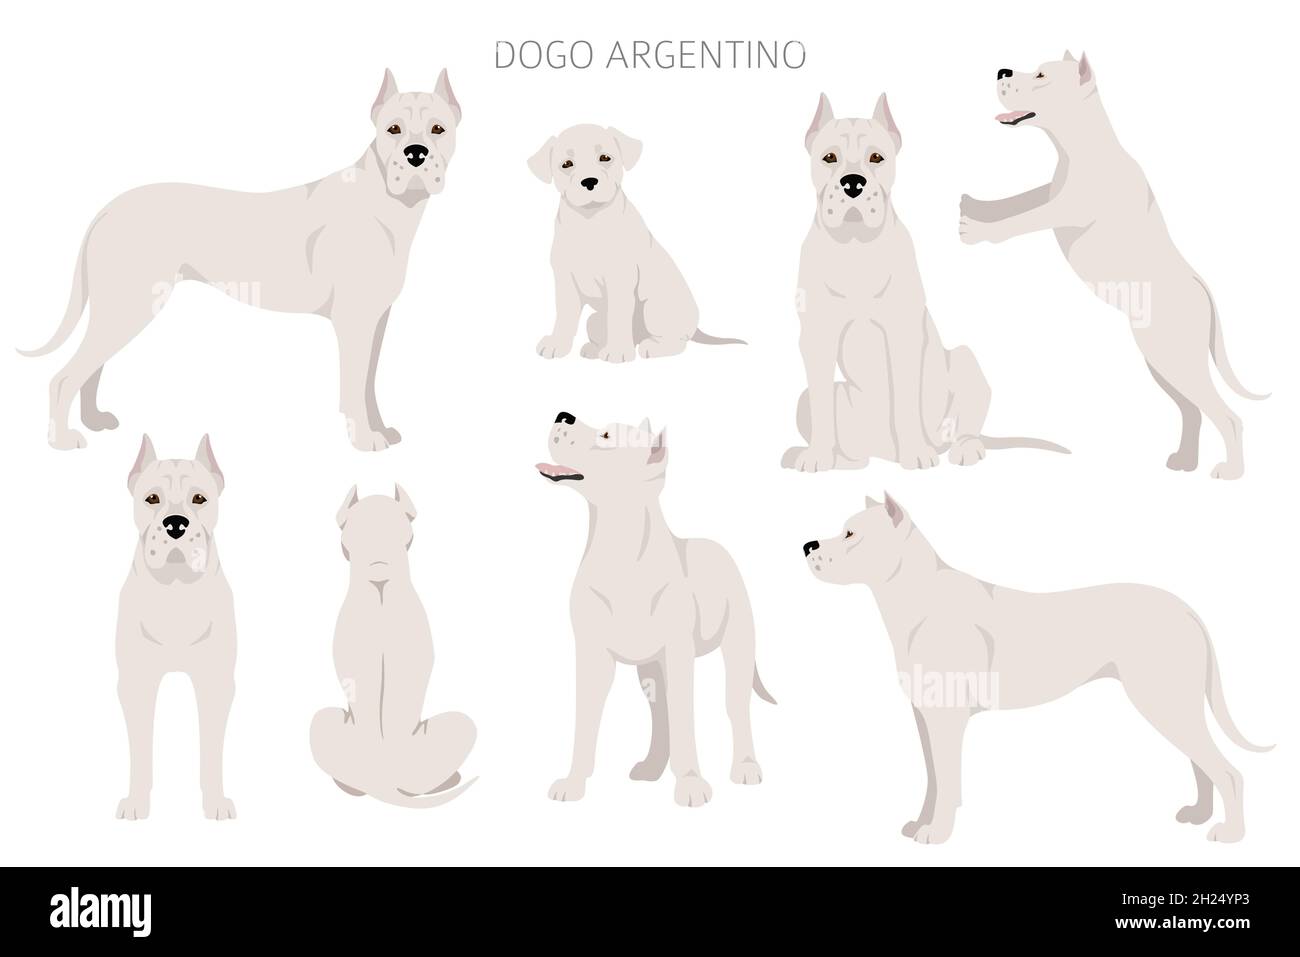 Dogo Argentino Clipart. Verschiedene Posen, Fellfarben eingestellt. Vektorgrafik Stock Vektor